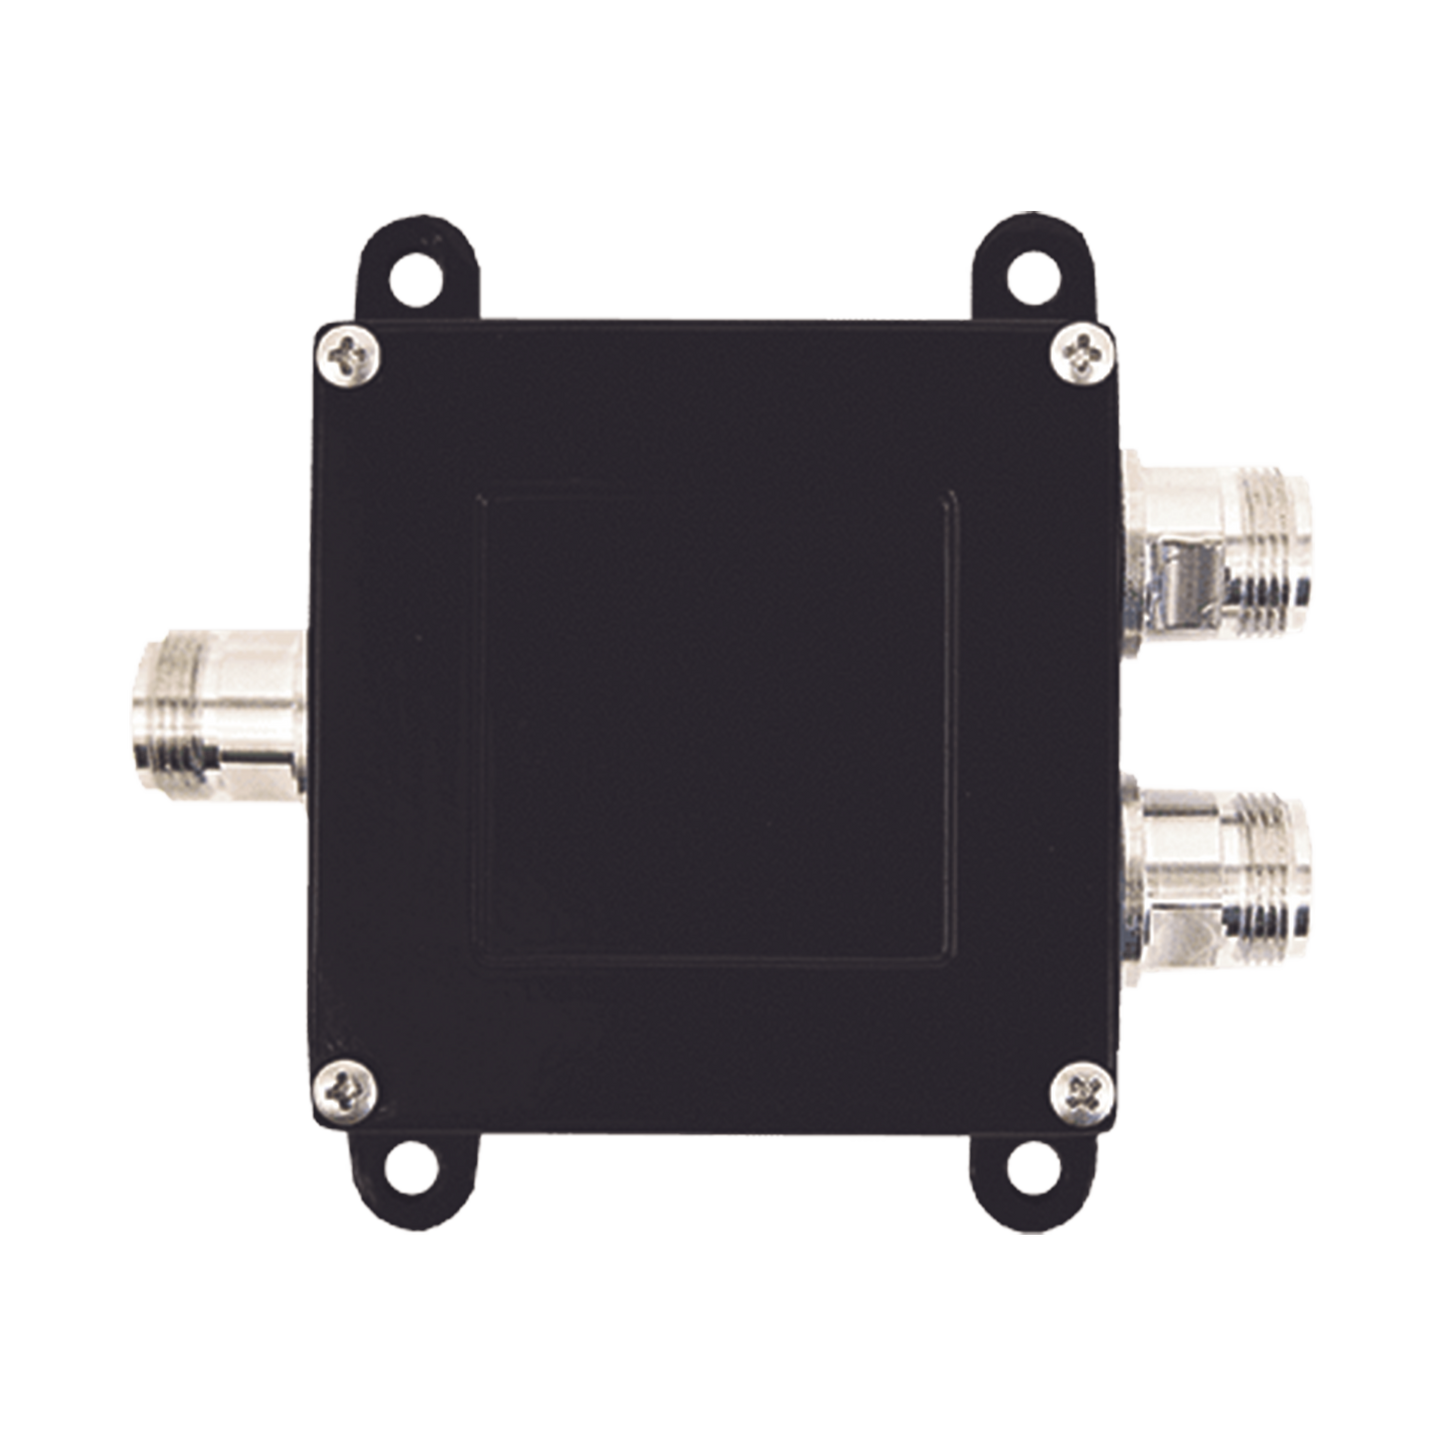 Separador TAP -7 dB con rango de frecuencia de 700 a 2500 MHz. Ideal para separar las antenas a diferentes longitudes de cable coaxial. 50 Ohm. Conectores N Hembra.